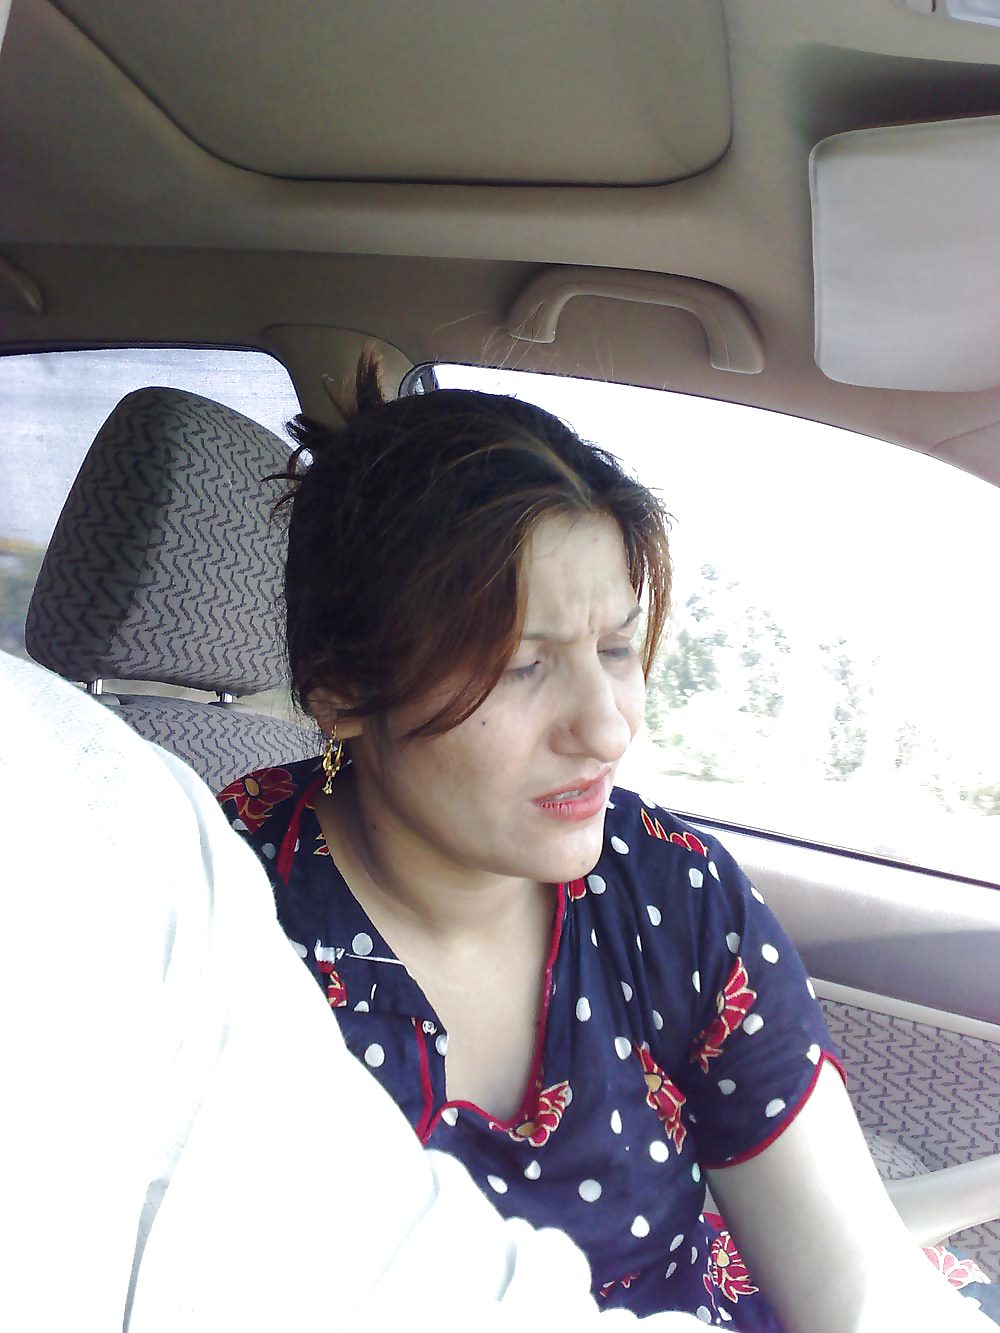 Pakistani prostitute in car #6103159